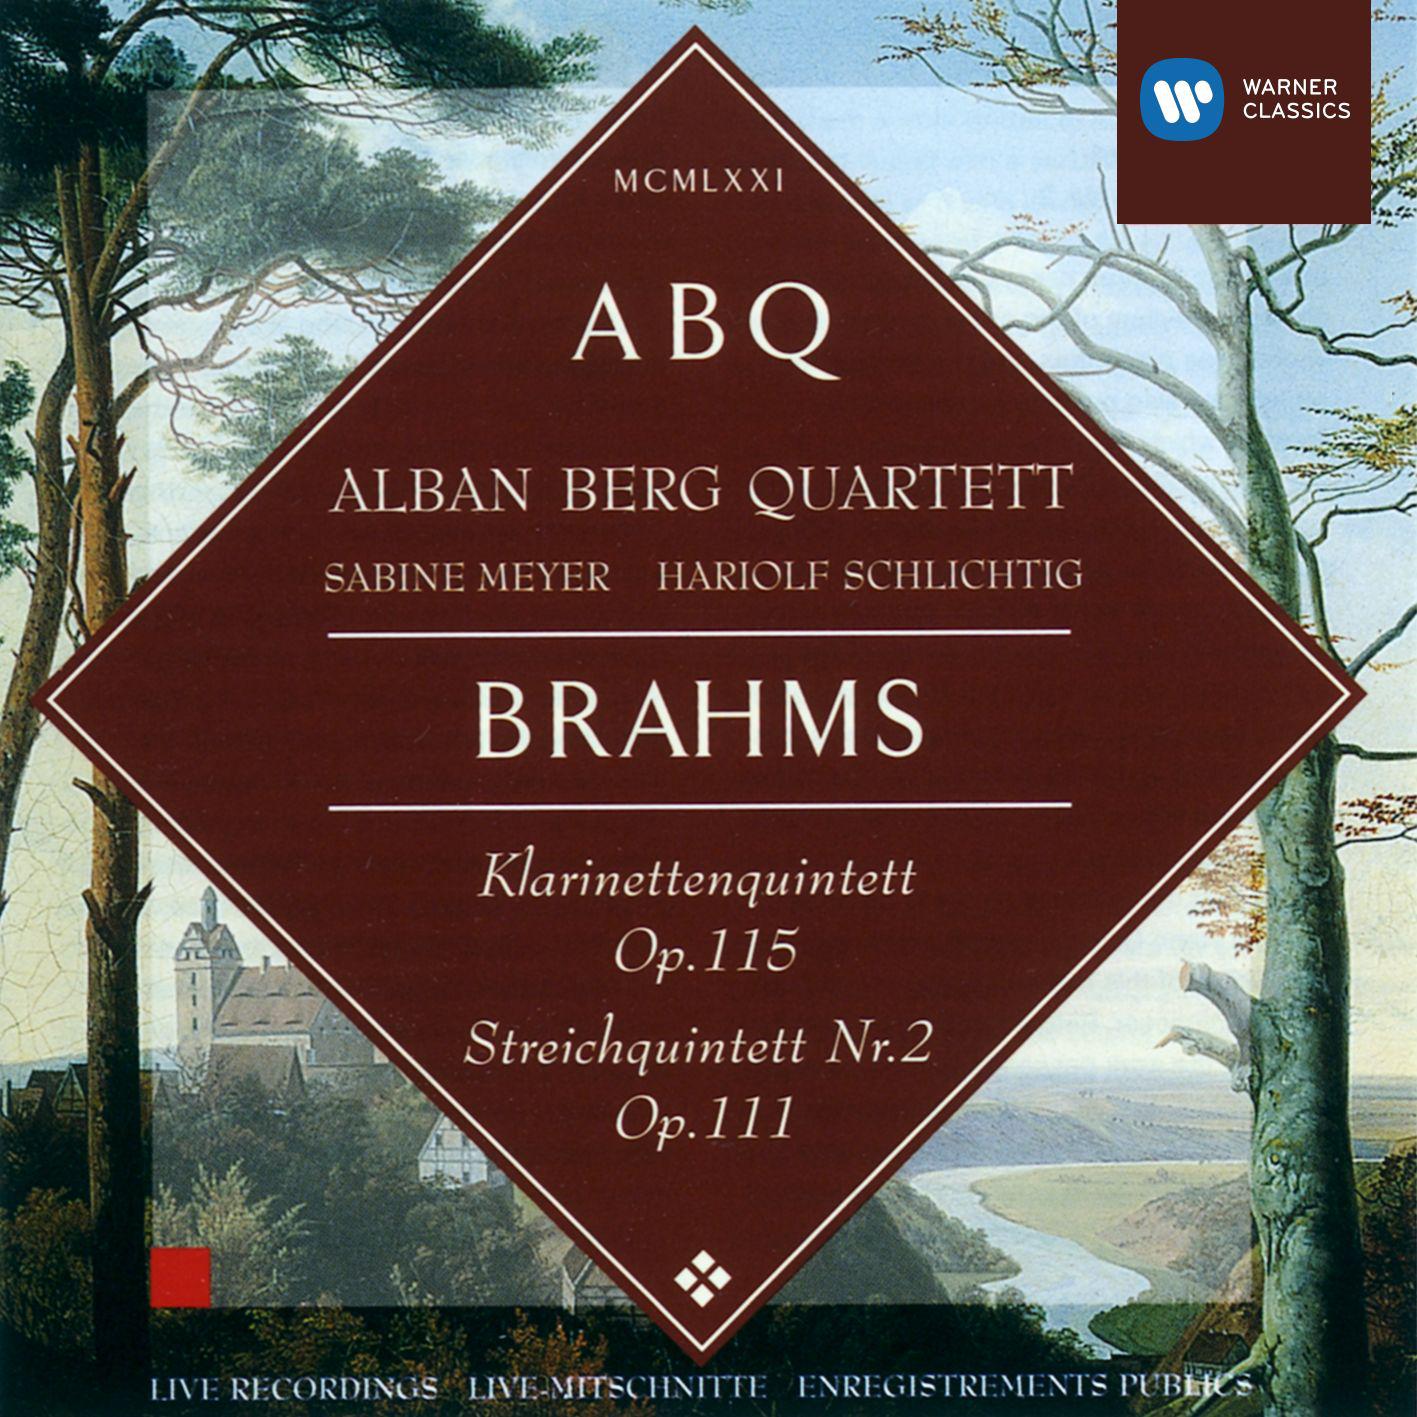 Brahms: Klarinettenquintett, Op.115 & Streichquintett Nr. 2, Op.111